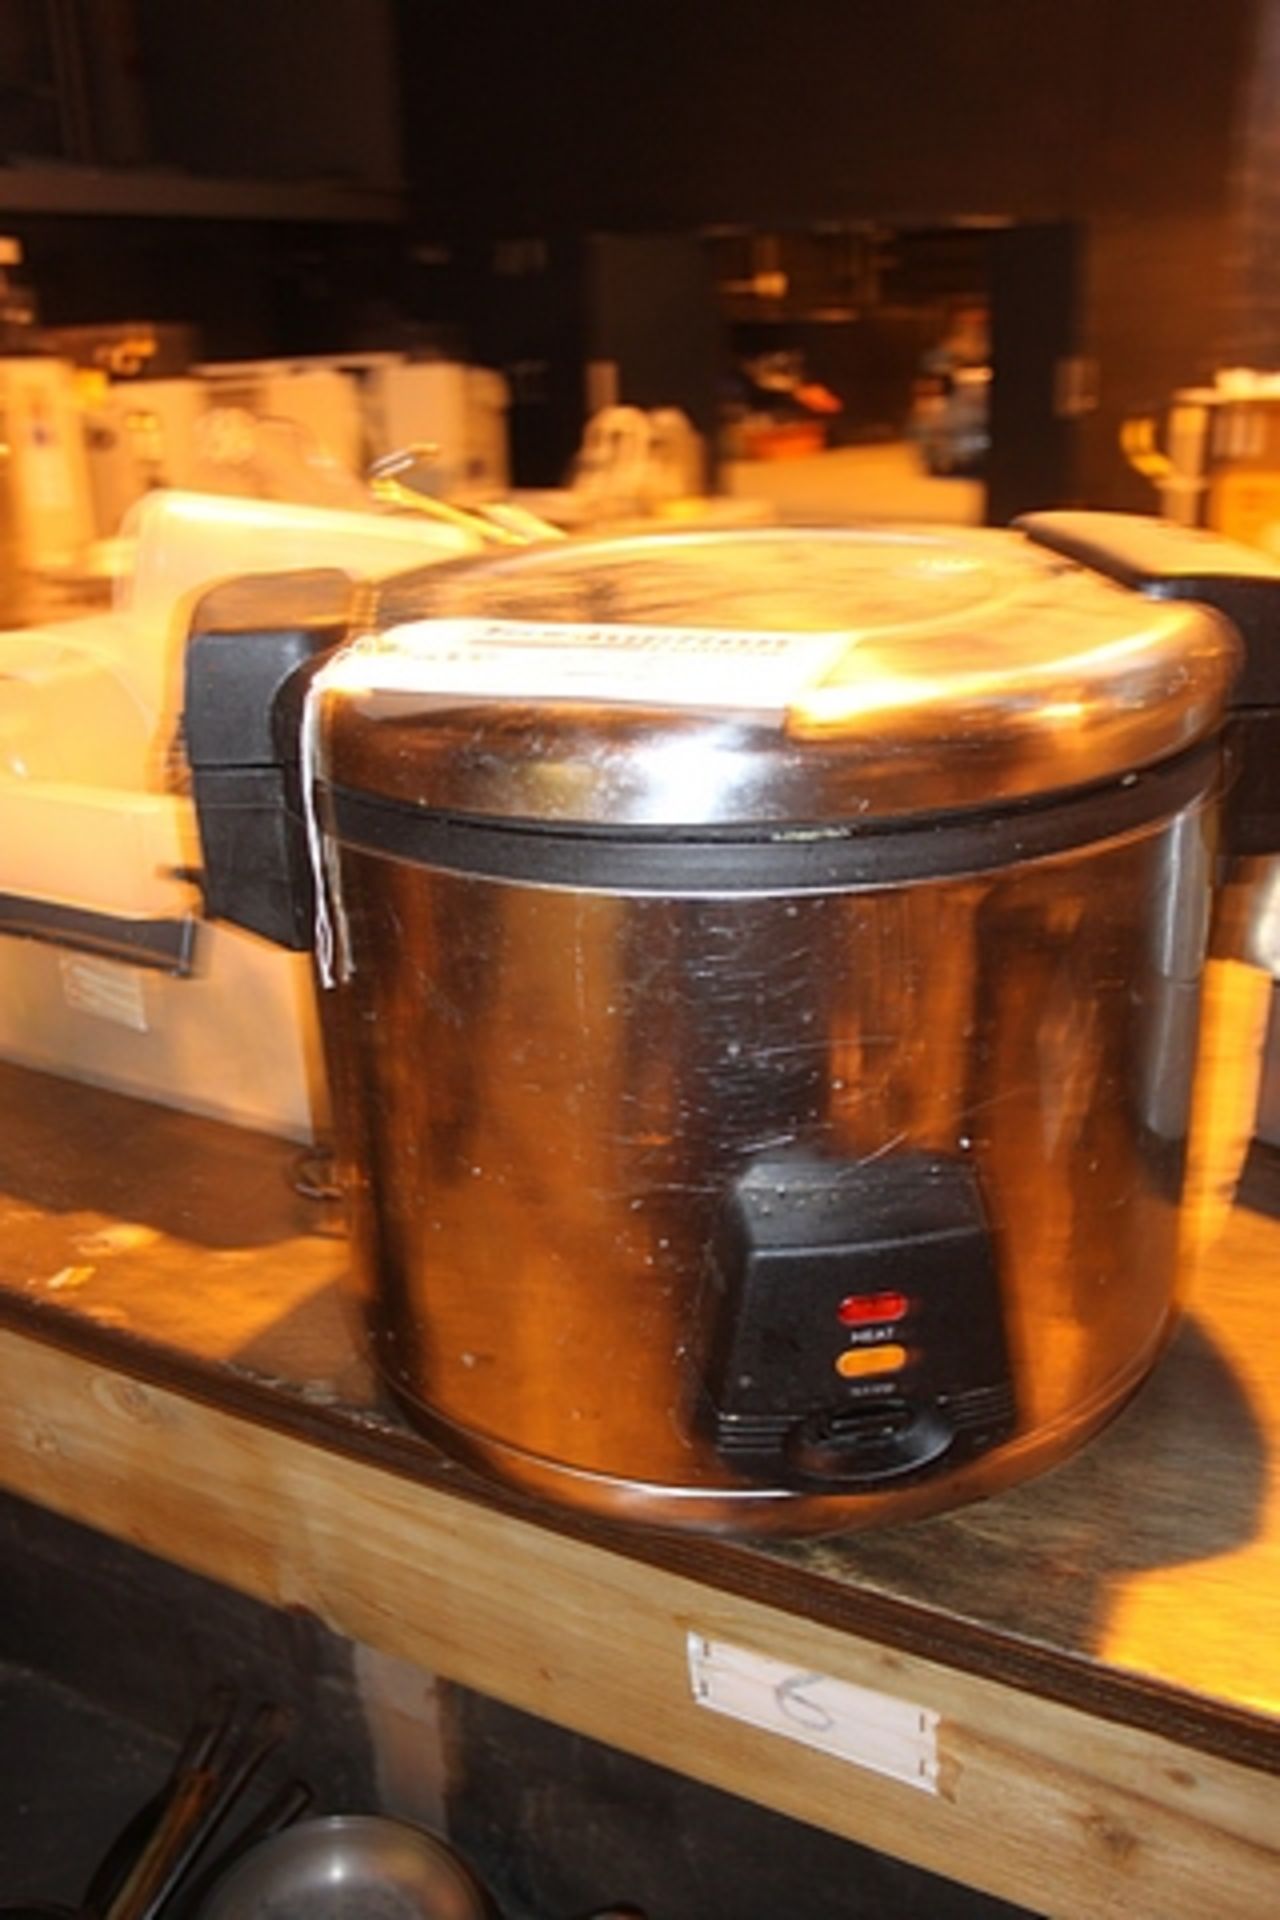 Buffalo J300 electric 6 litre rice cooker